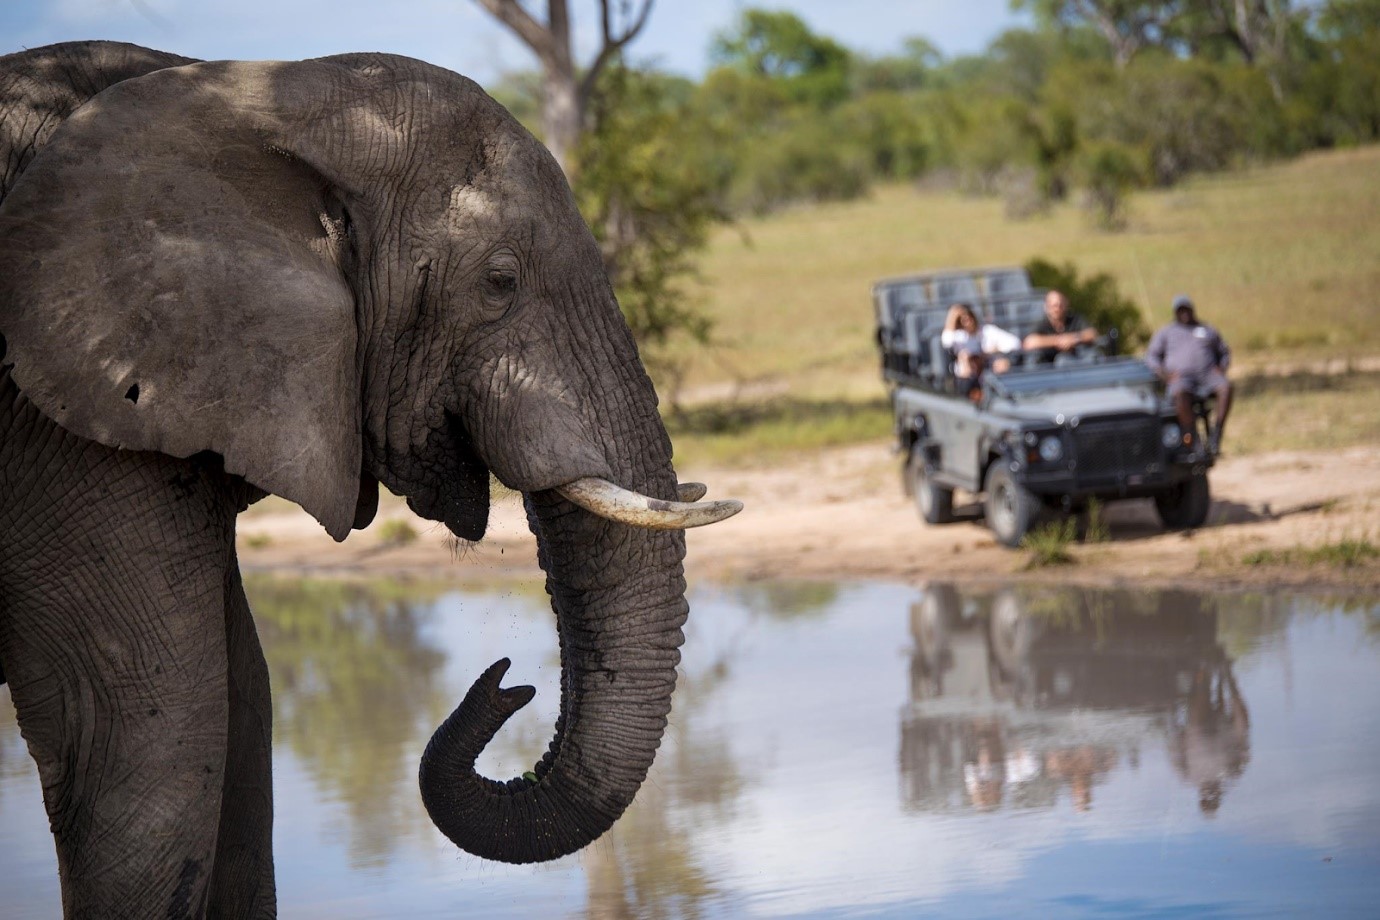 Elephant and safari vehicle in Kruger National Park